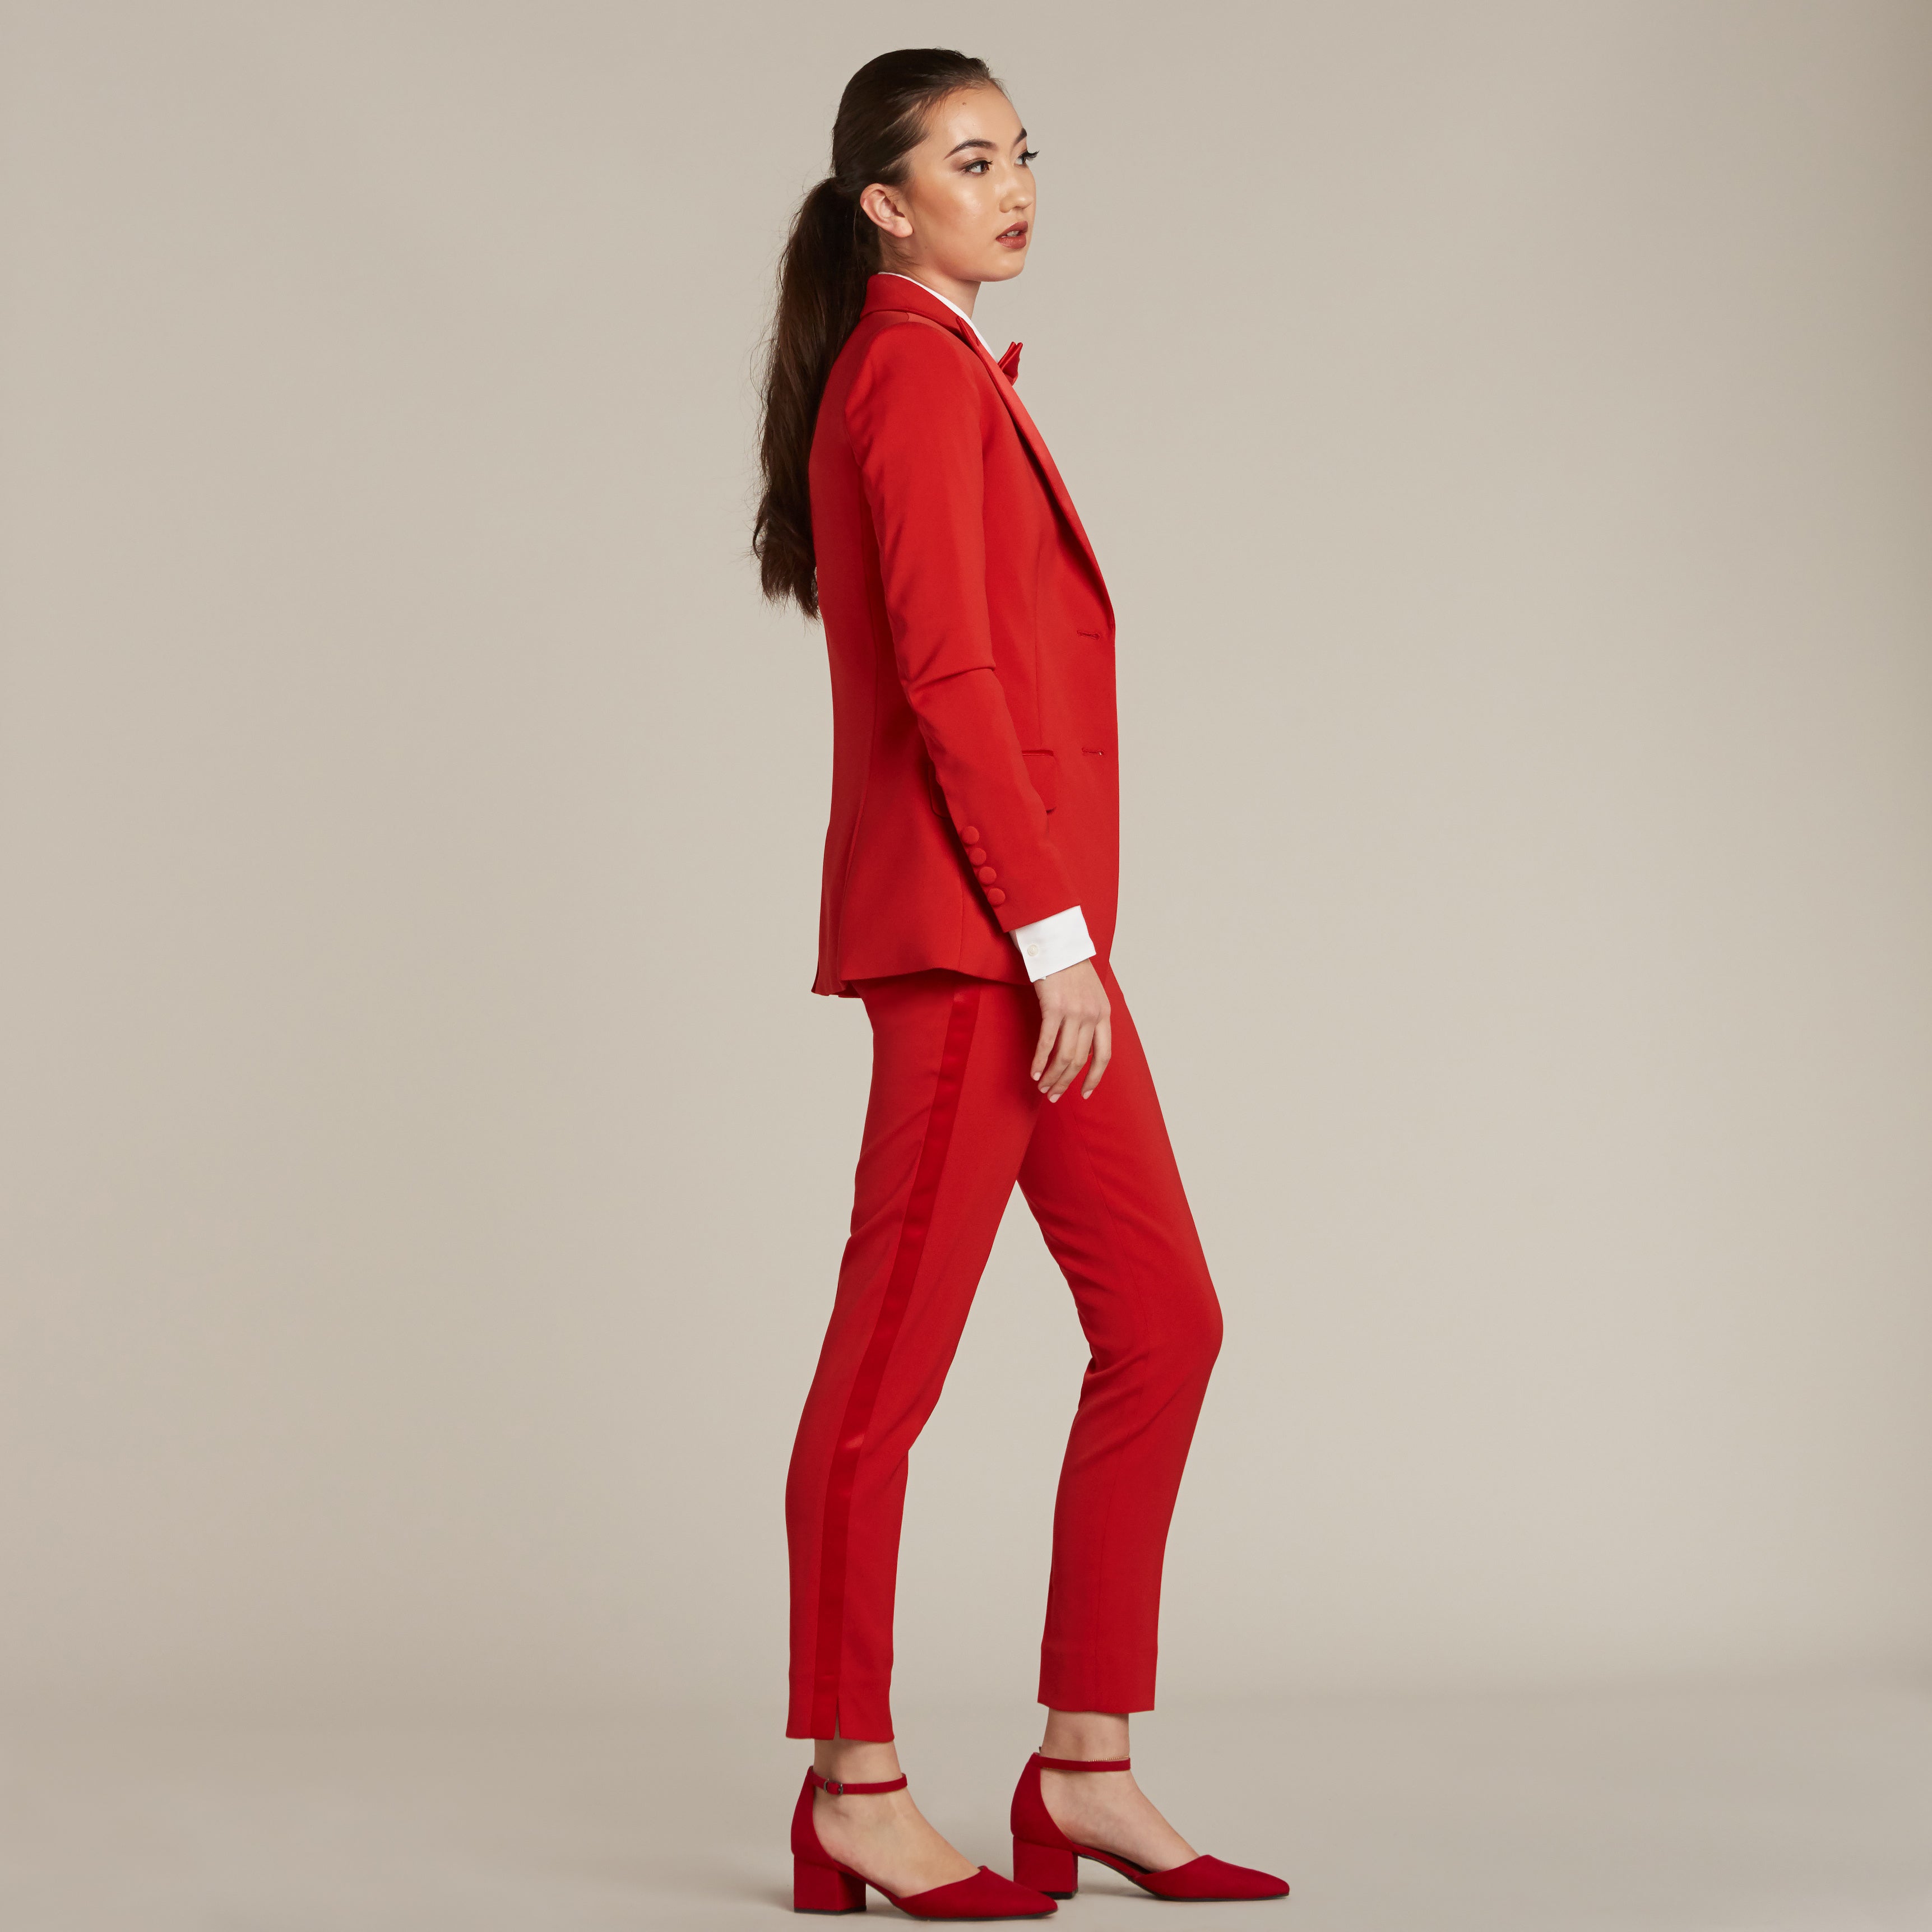 ASOS  Suits  Blazers  Asos Red Tuxedo Pants Jacket  Poshmark